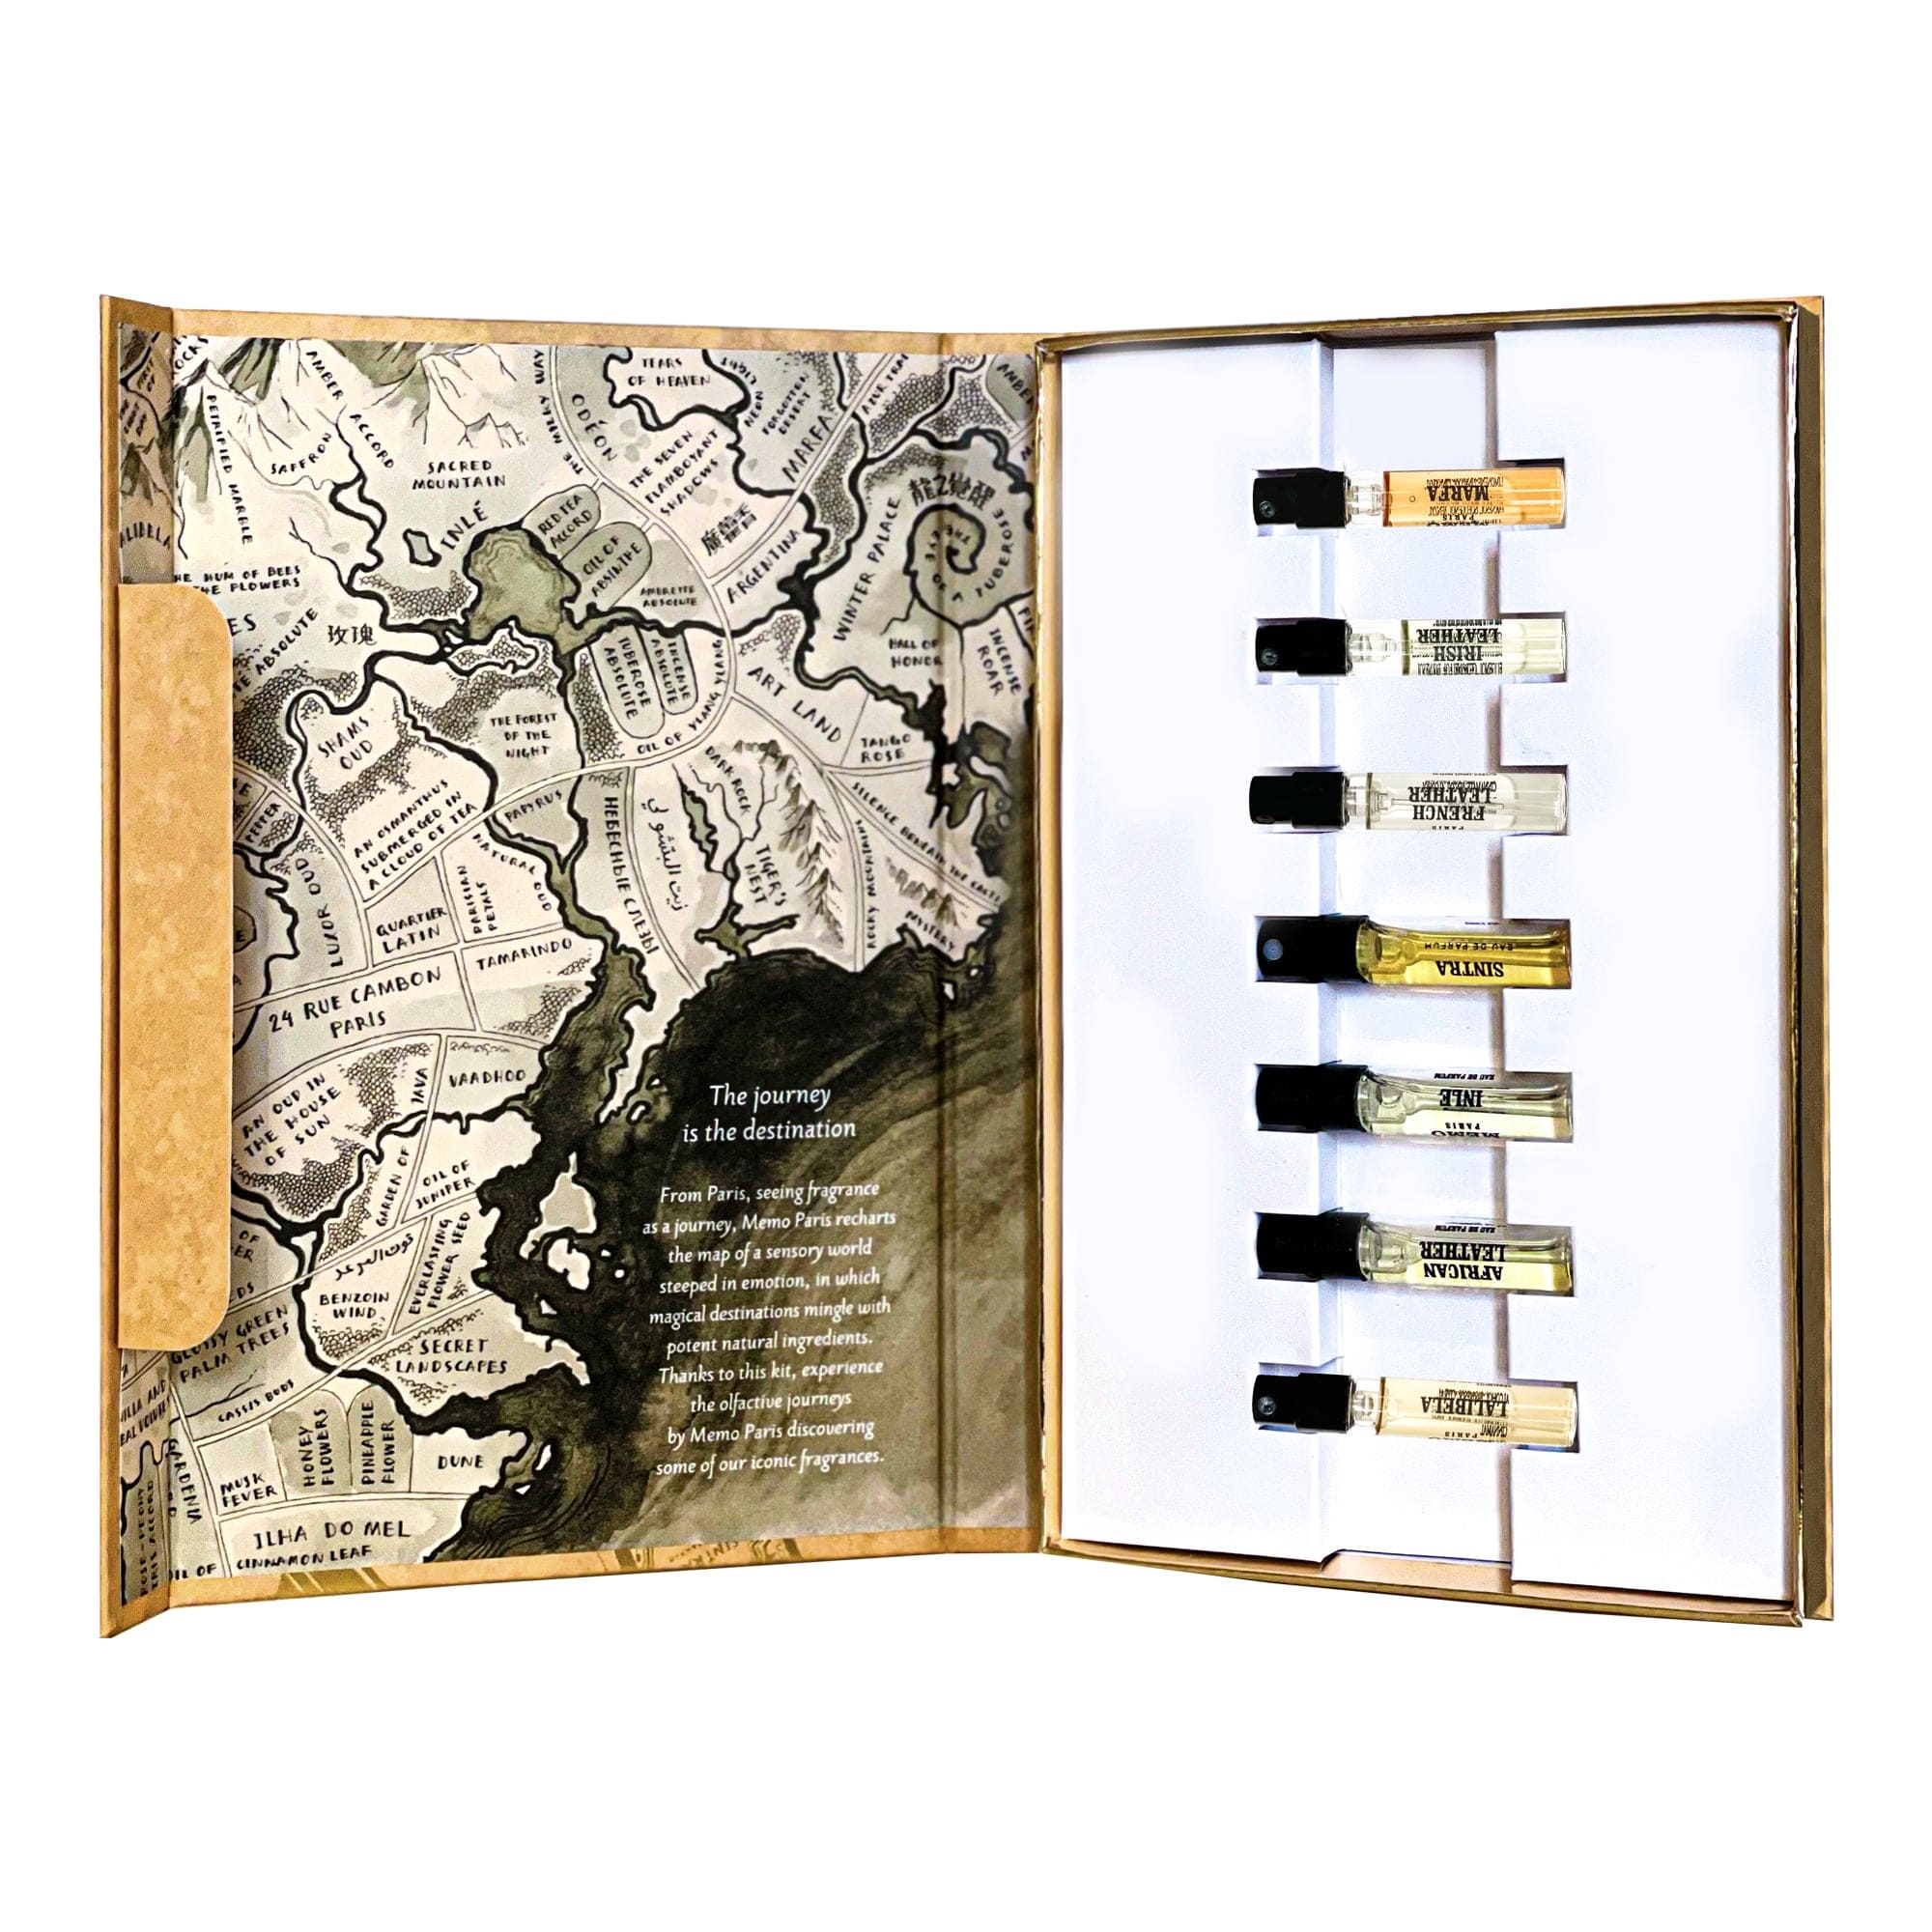 Discovery kit x 7 muestras 'Journey book' de Memo Paris